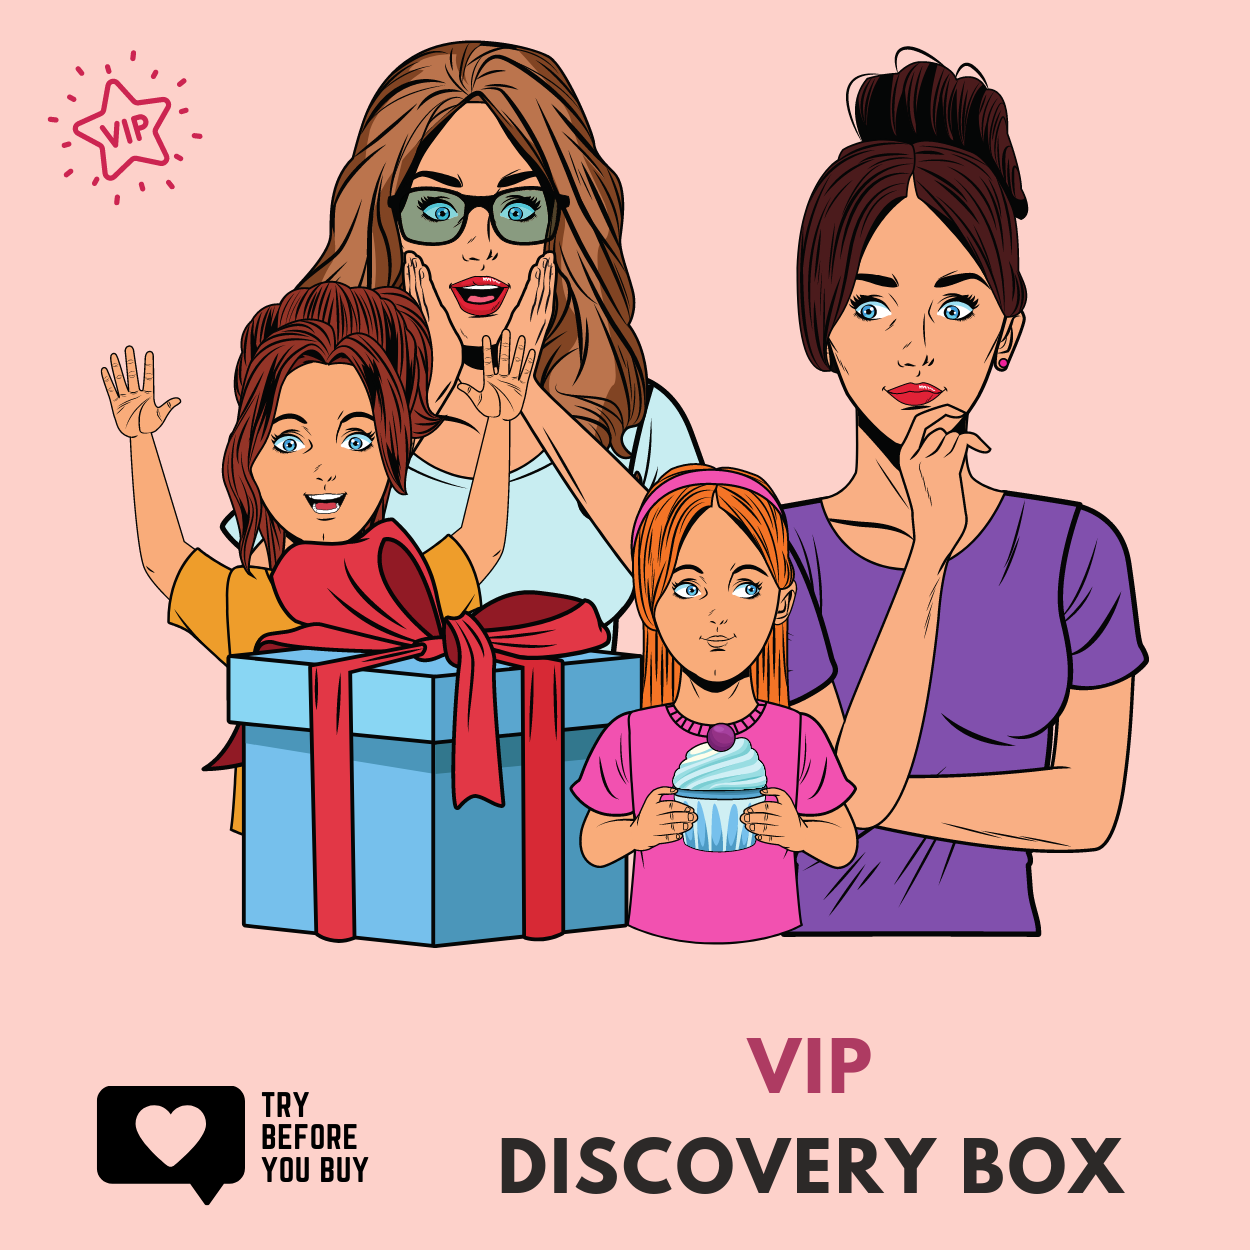 VIP DISCOVERY BOX